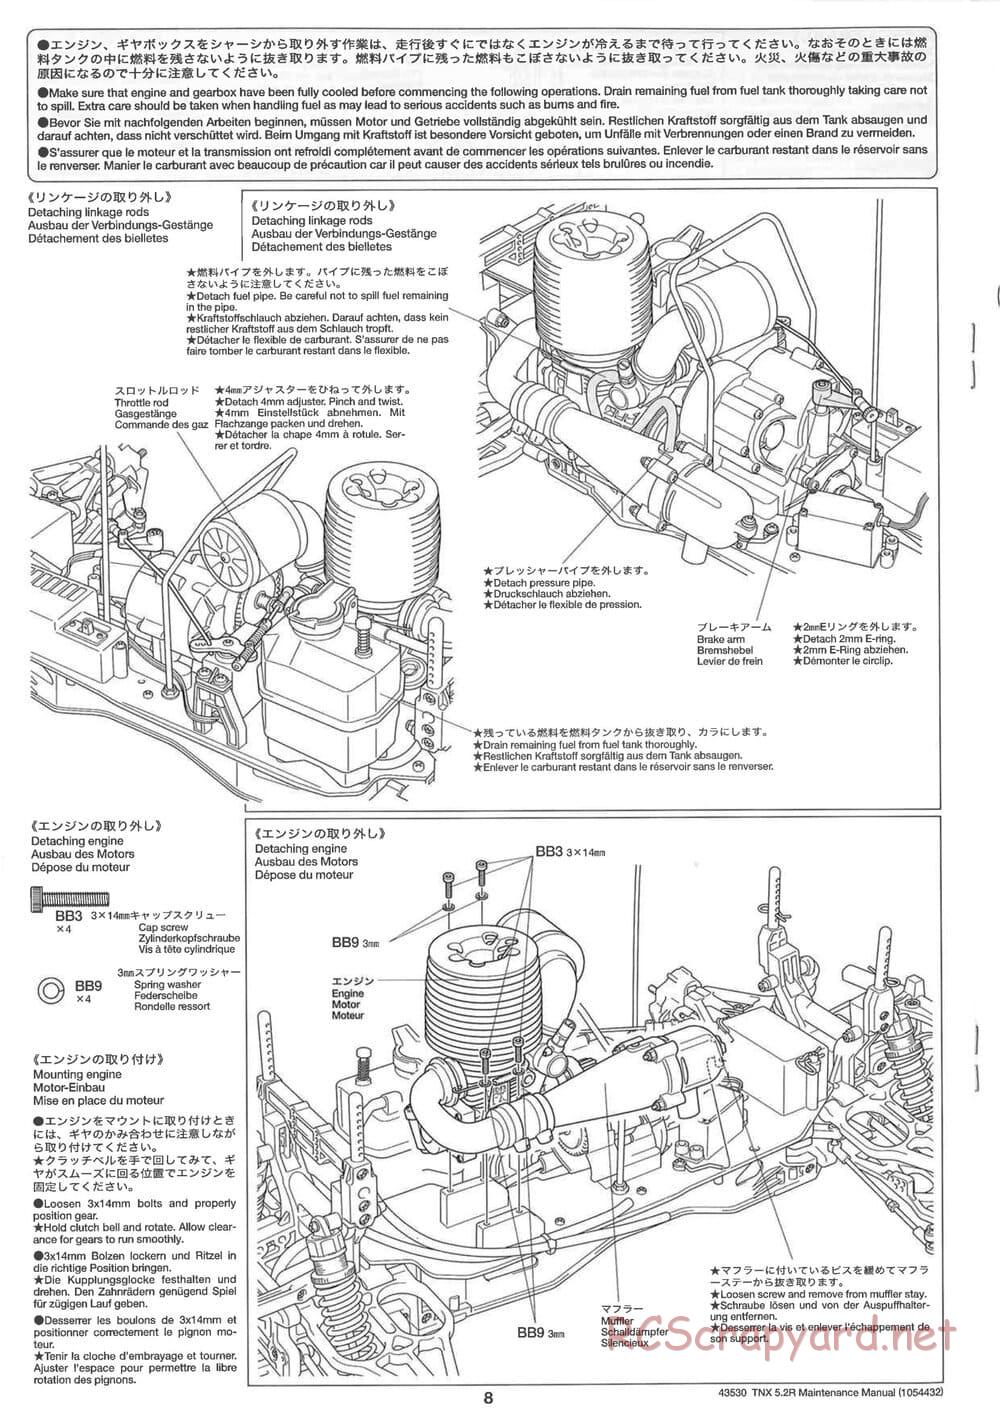 Tamiya - TNX 5.2R - TGM-04 - Maintenance Manual - Page 8